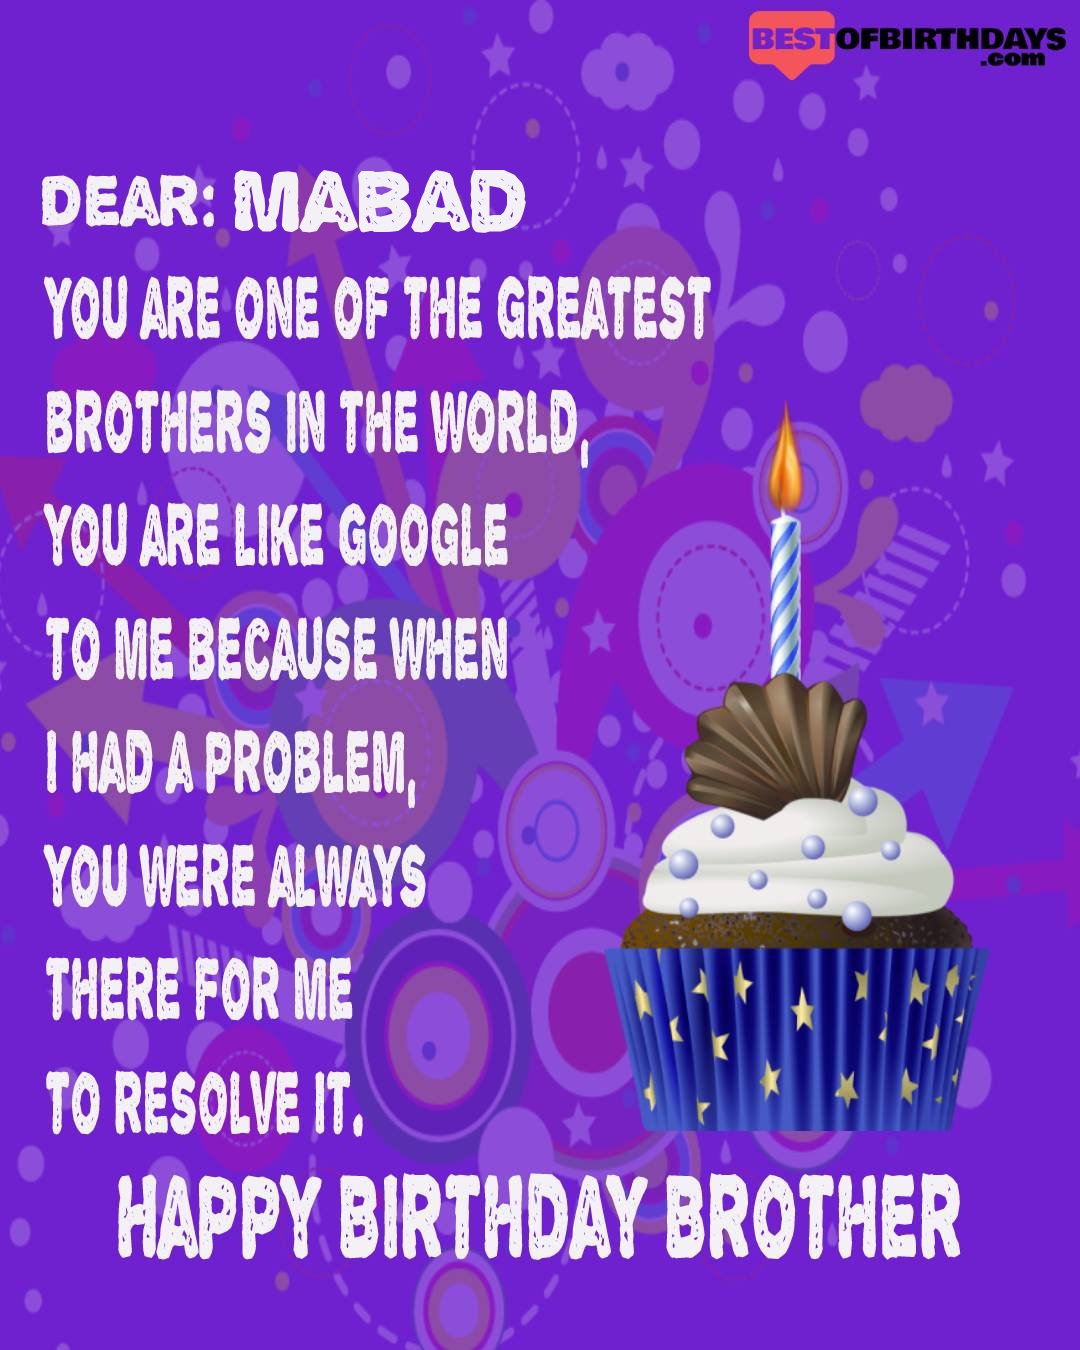 Happy birthday mabad bhai brother bro